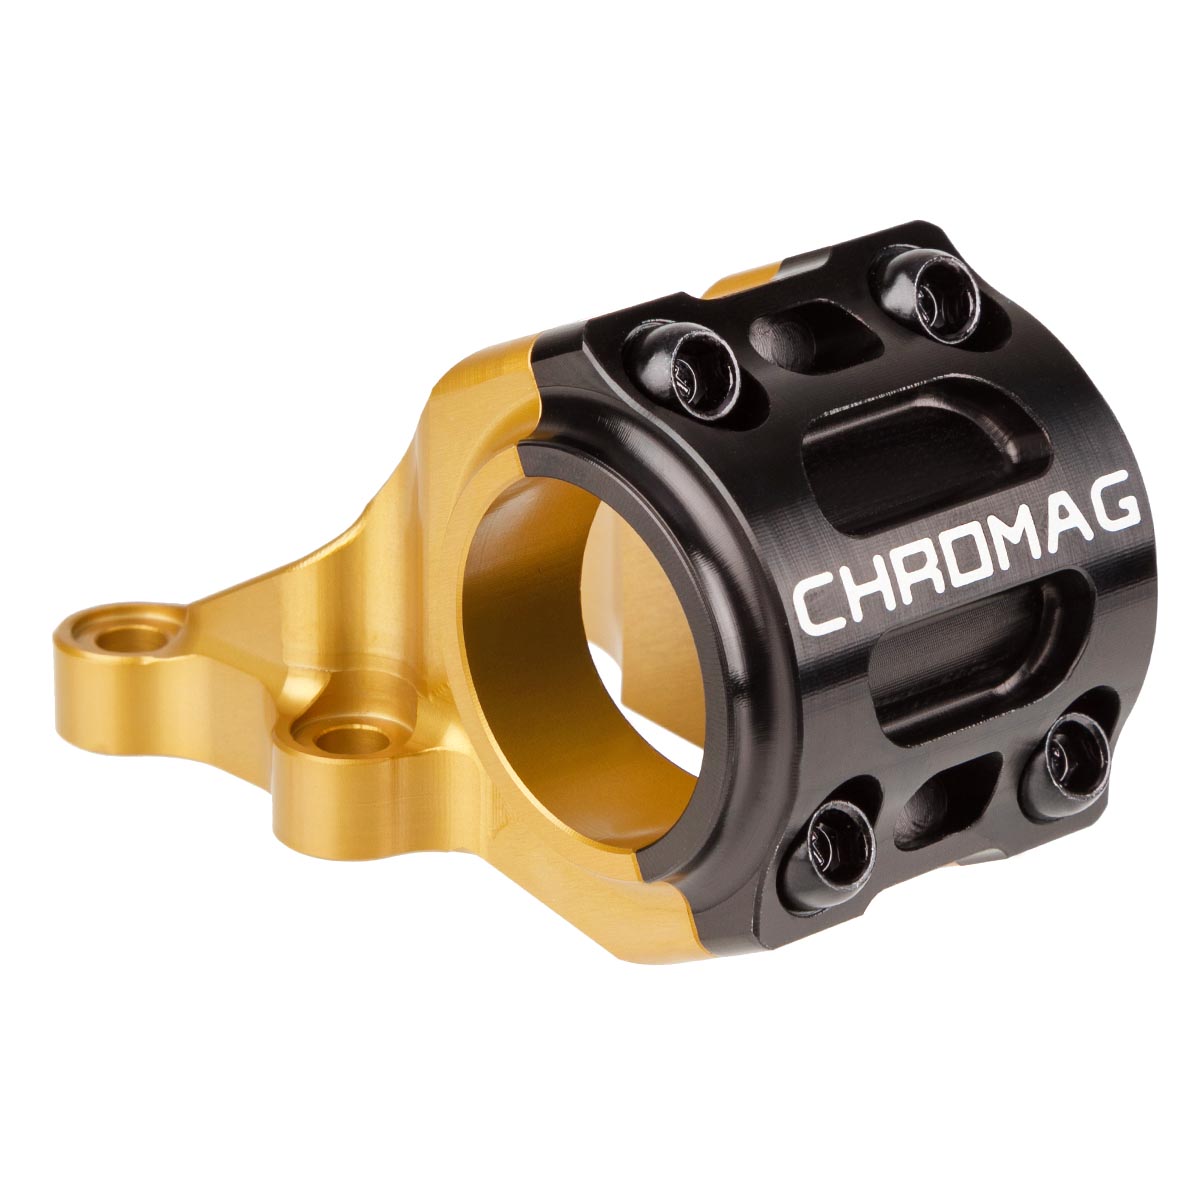 Chromag Attacco Manubrio MTB Director Direct Mount 31.8 mm, 47 mm Reach, Oro